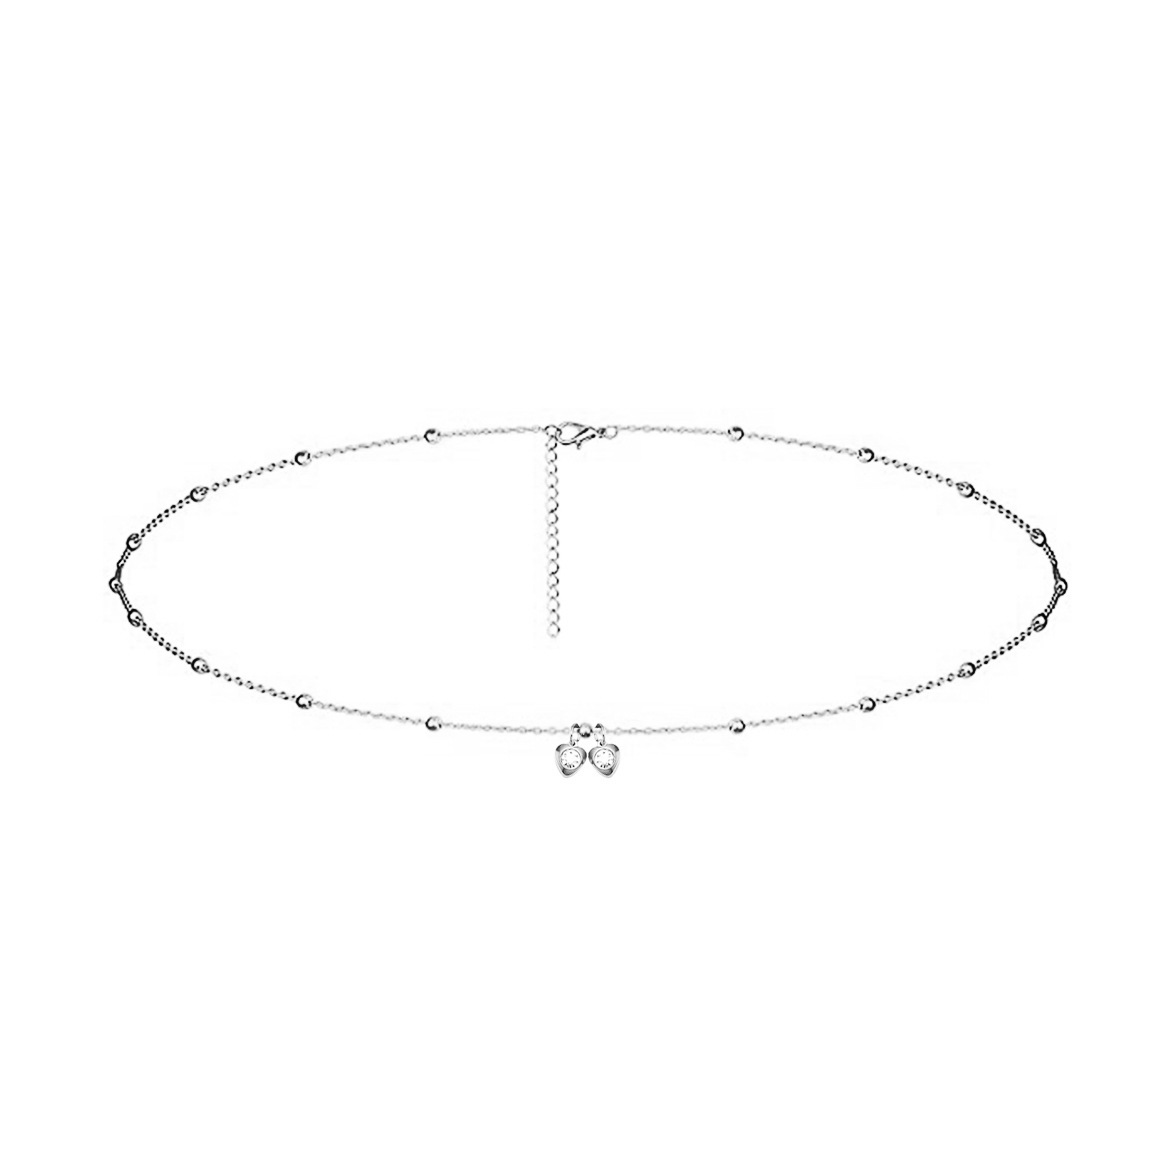 ALAD197-01-bead chain silver 80cm-20cm